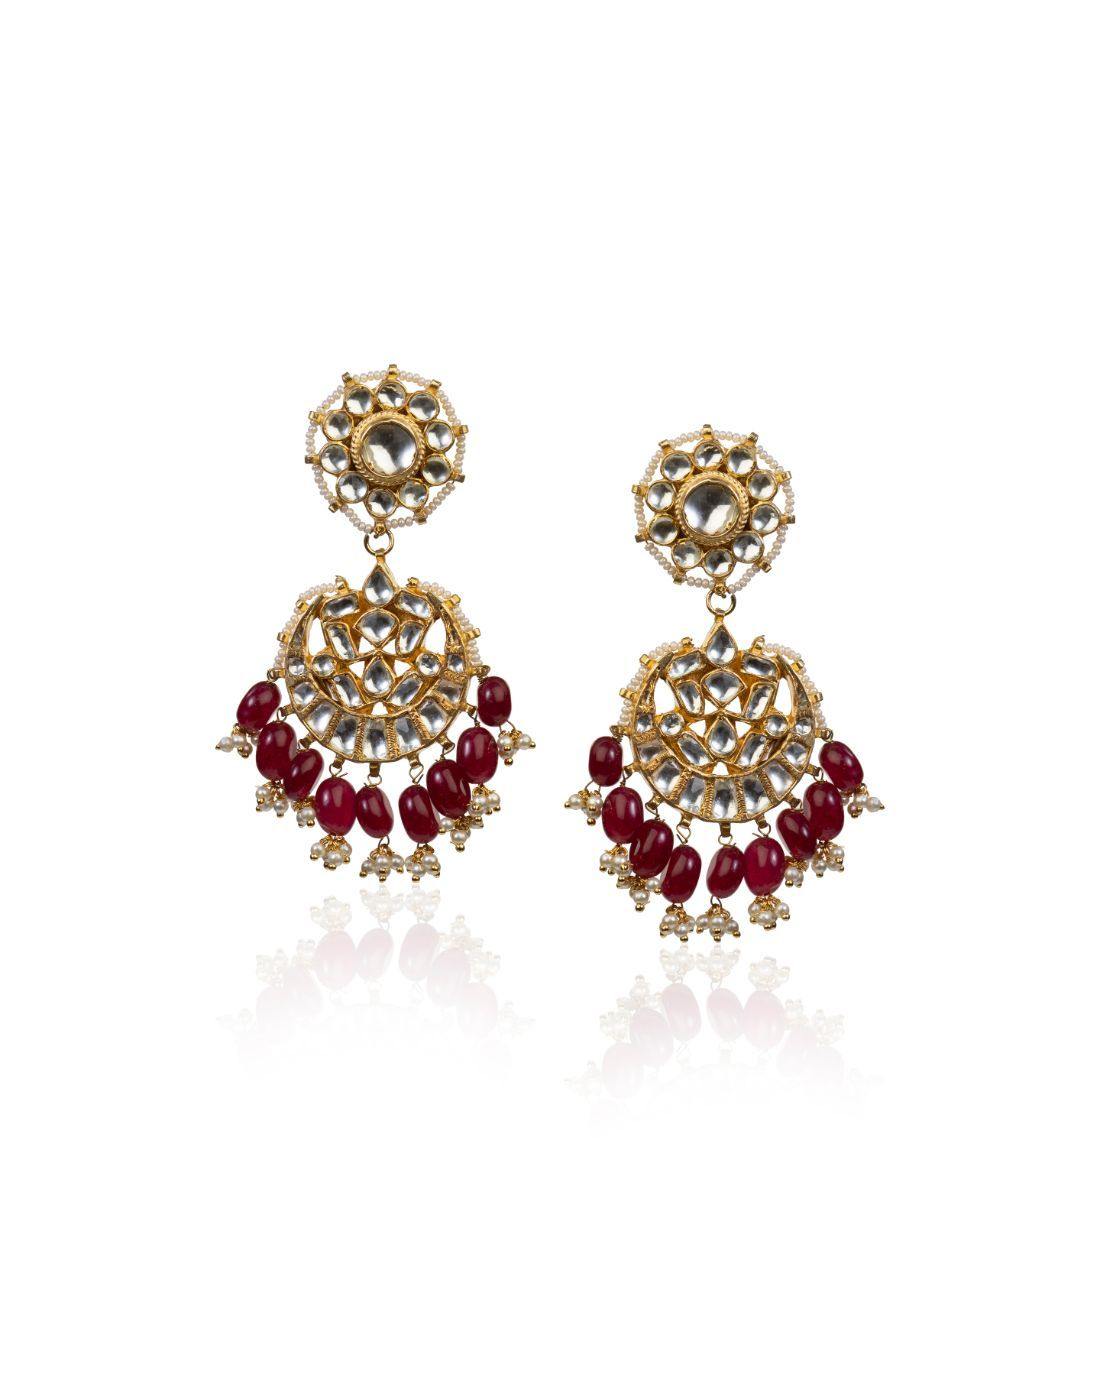 Buy Maroon diva earrings online from Ae Ri Sakhi